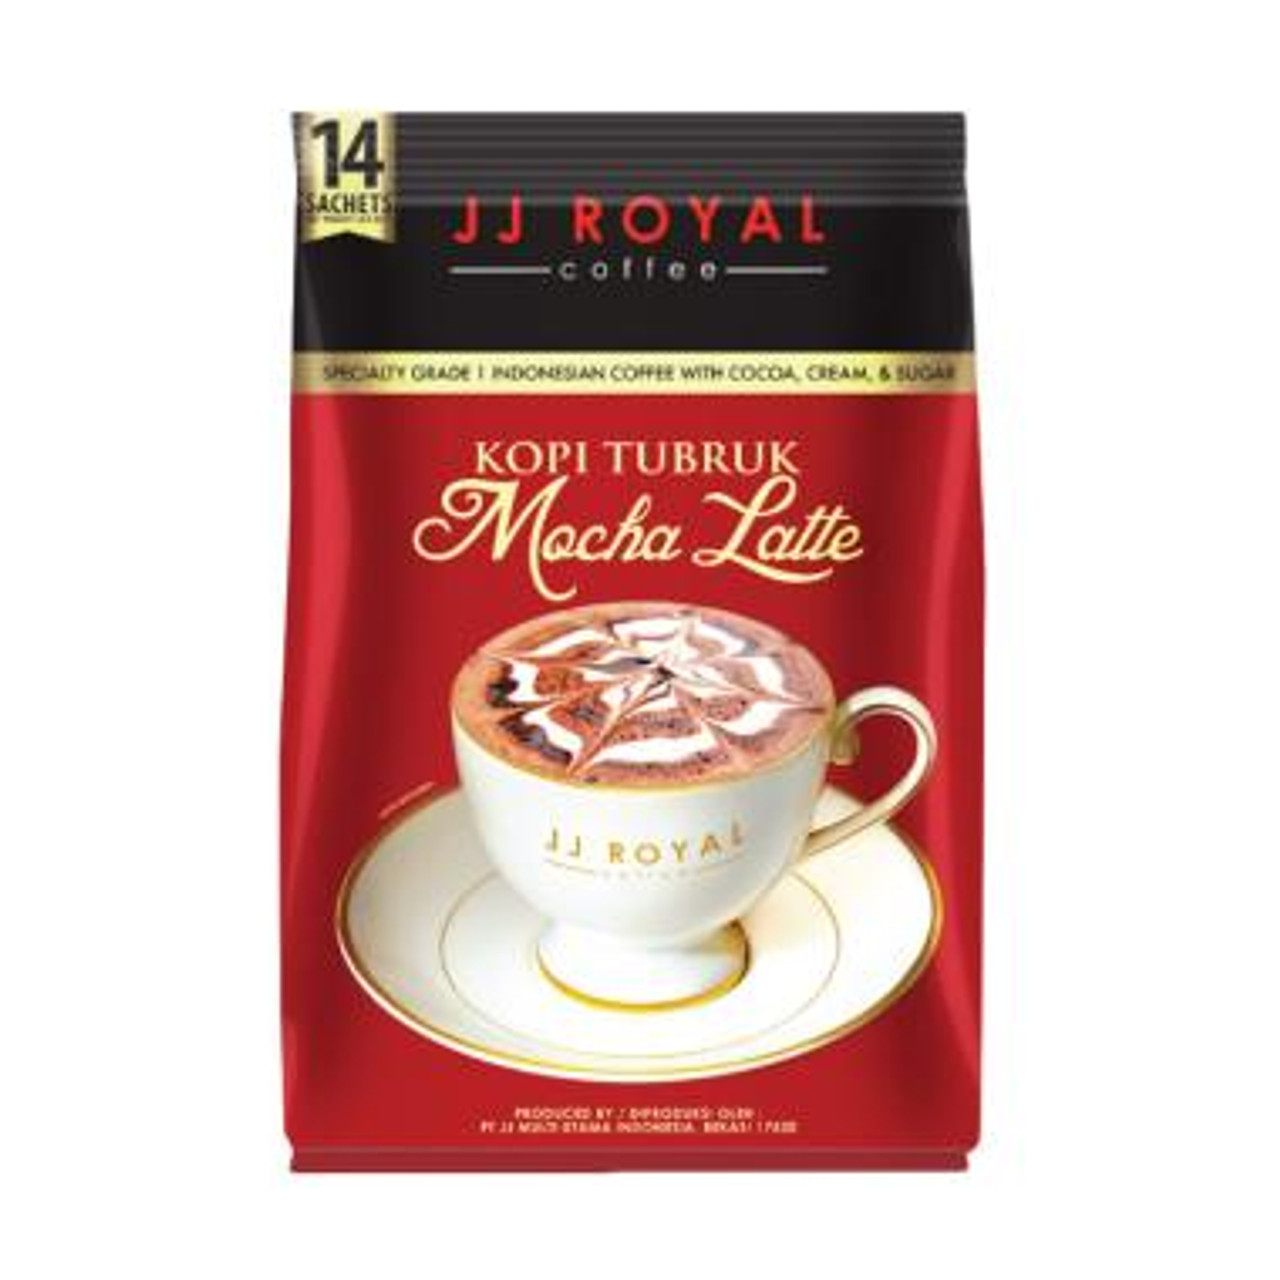 JJ Royal Kopi Tubruk Coffee Mocha Latte, 14 Sachets @ 30 Gram